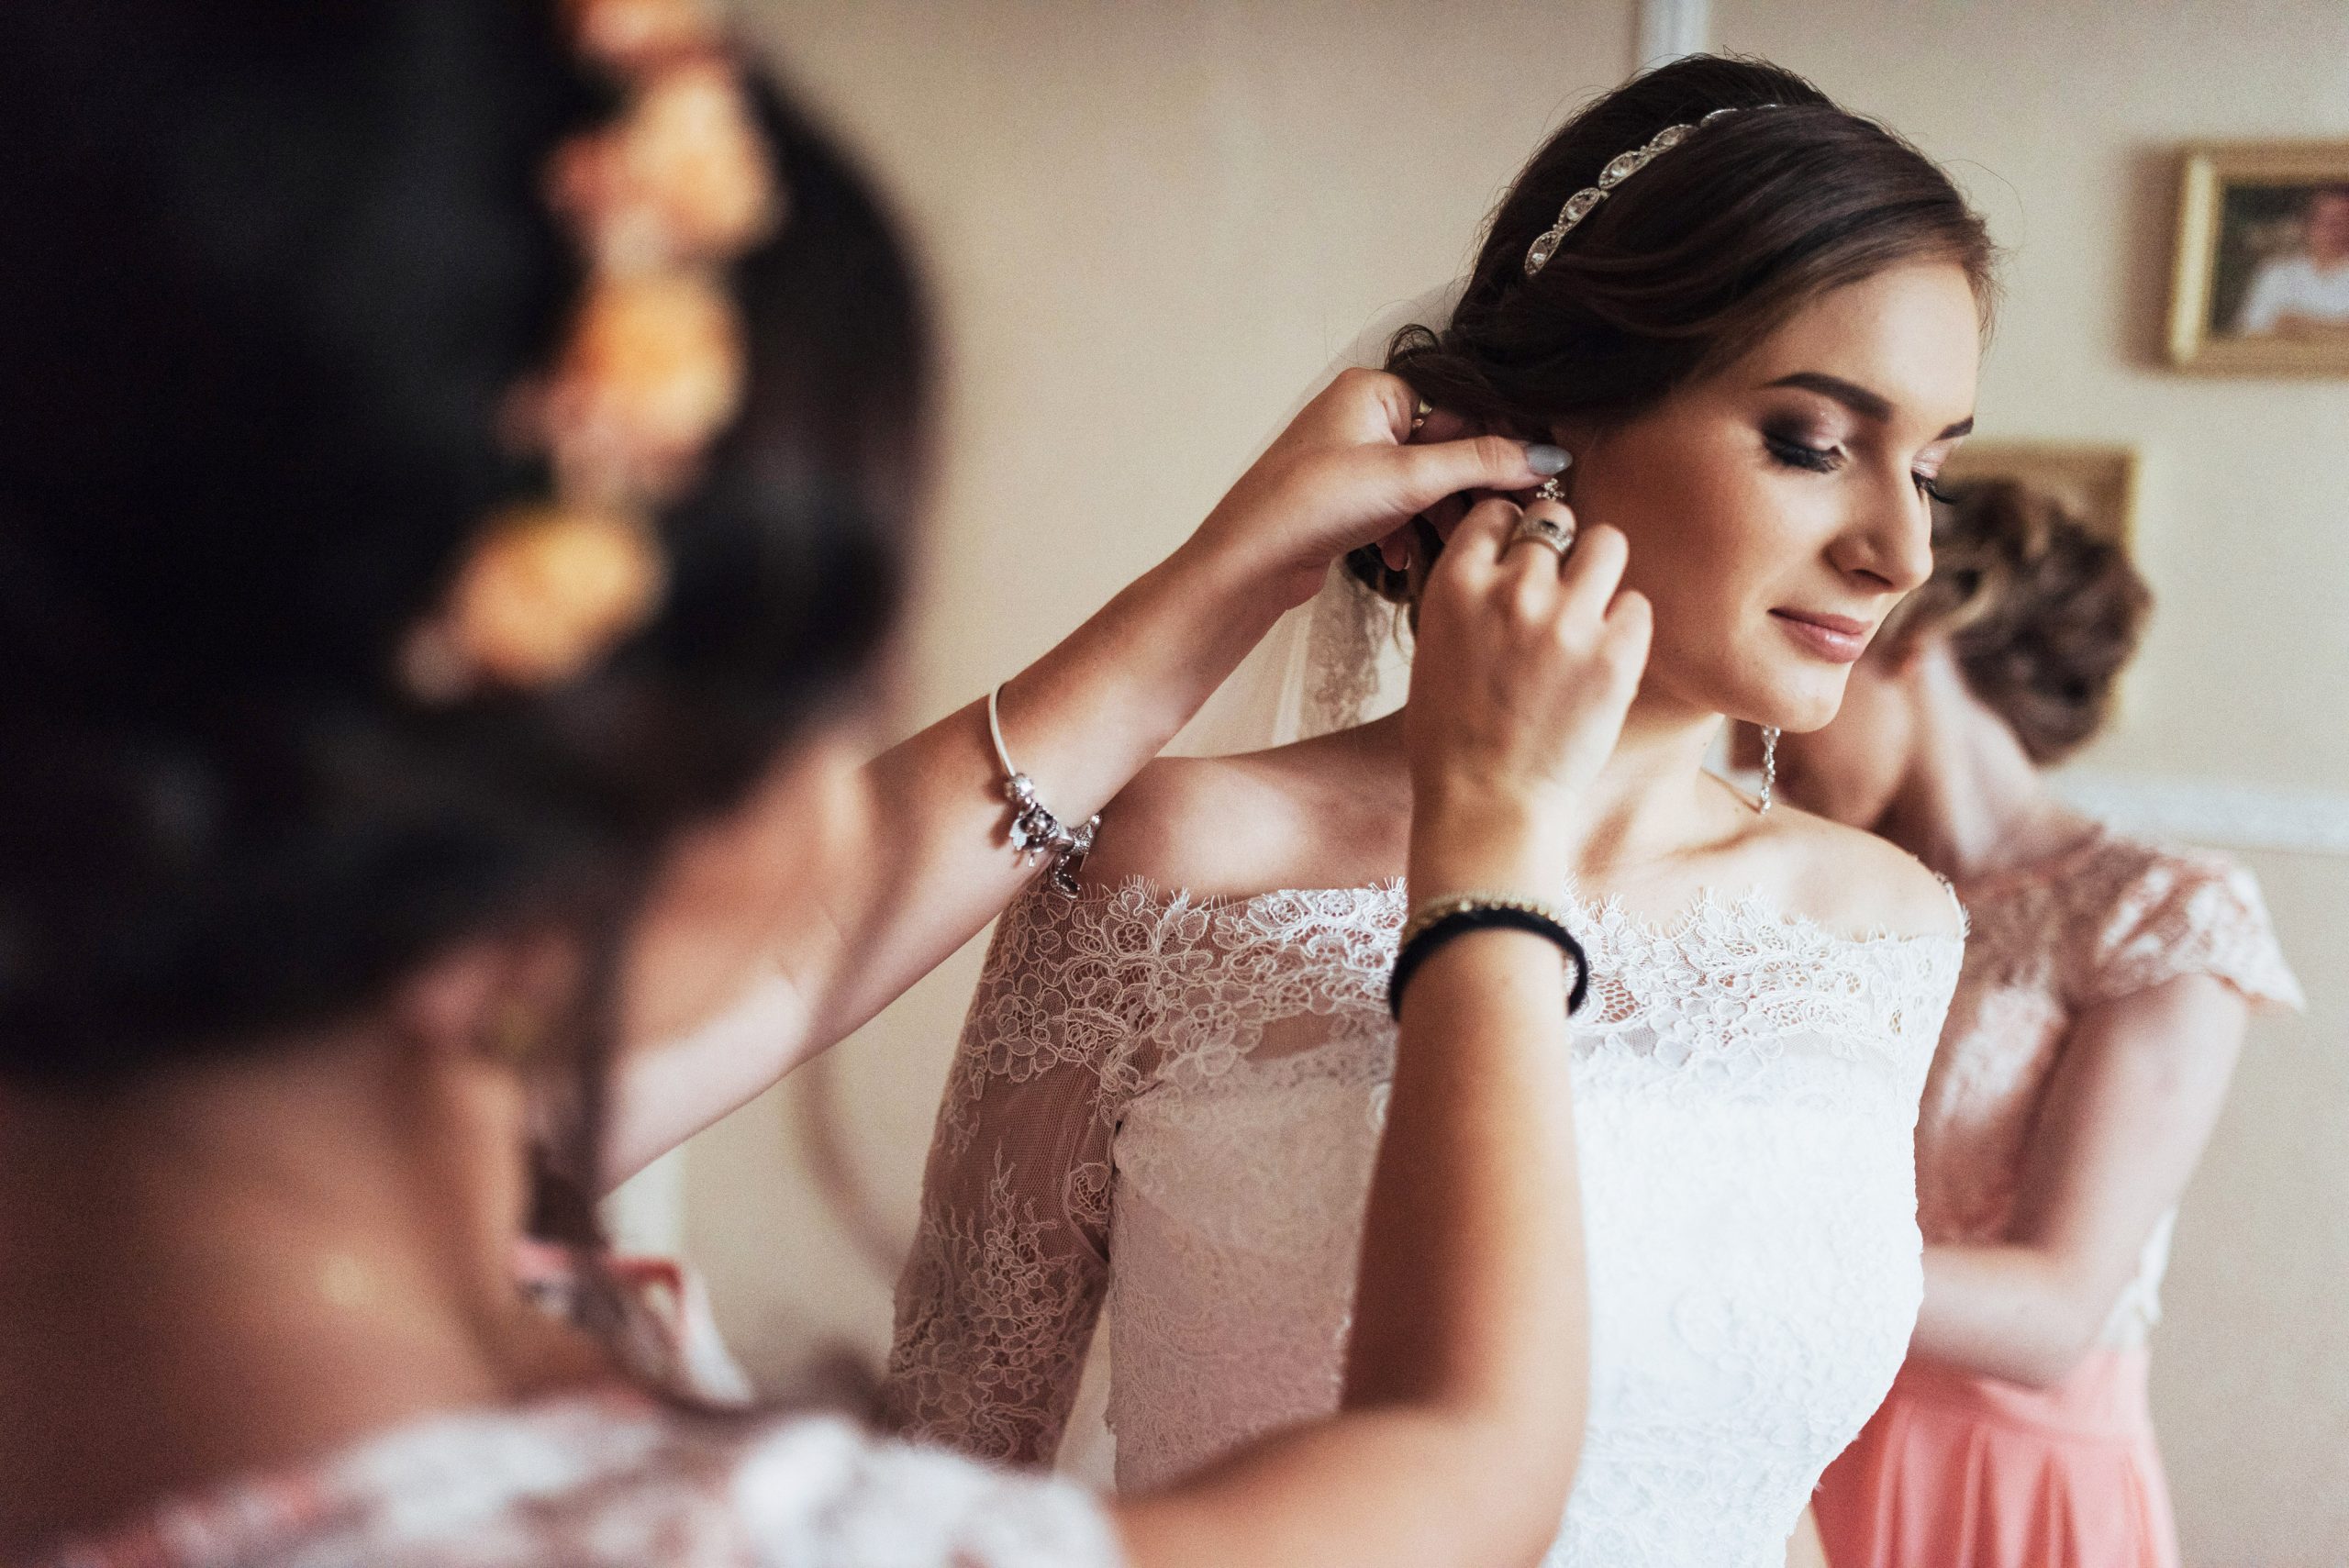 Wedding day. Beautiful bride trying on earrings